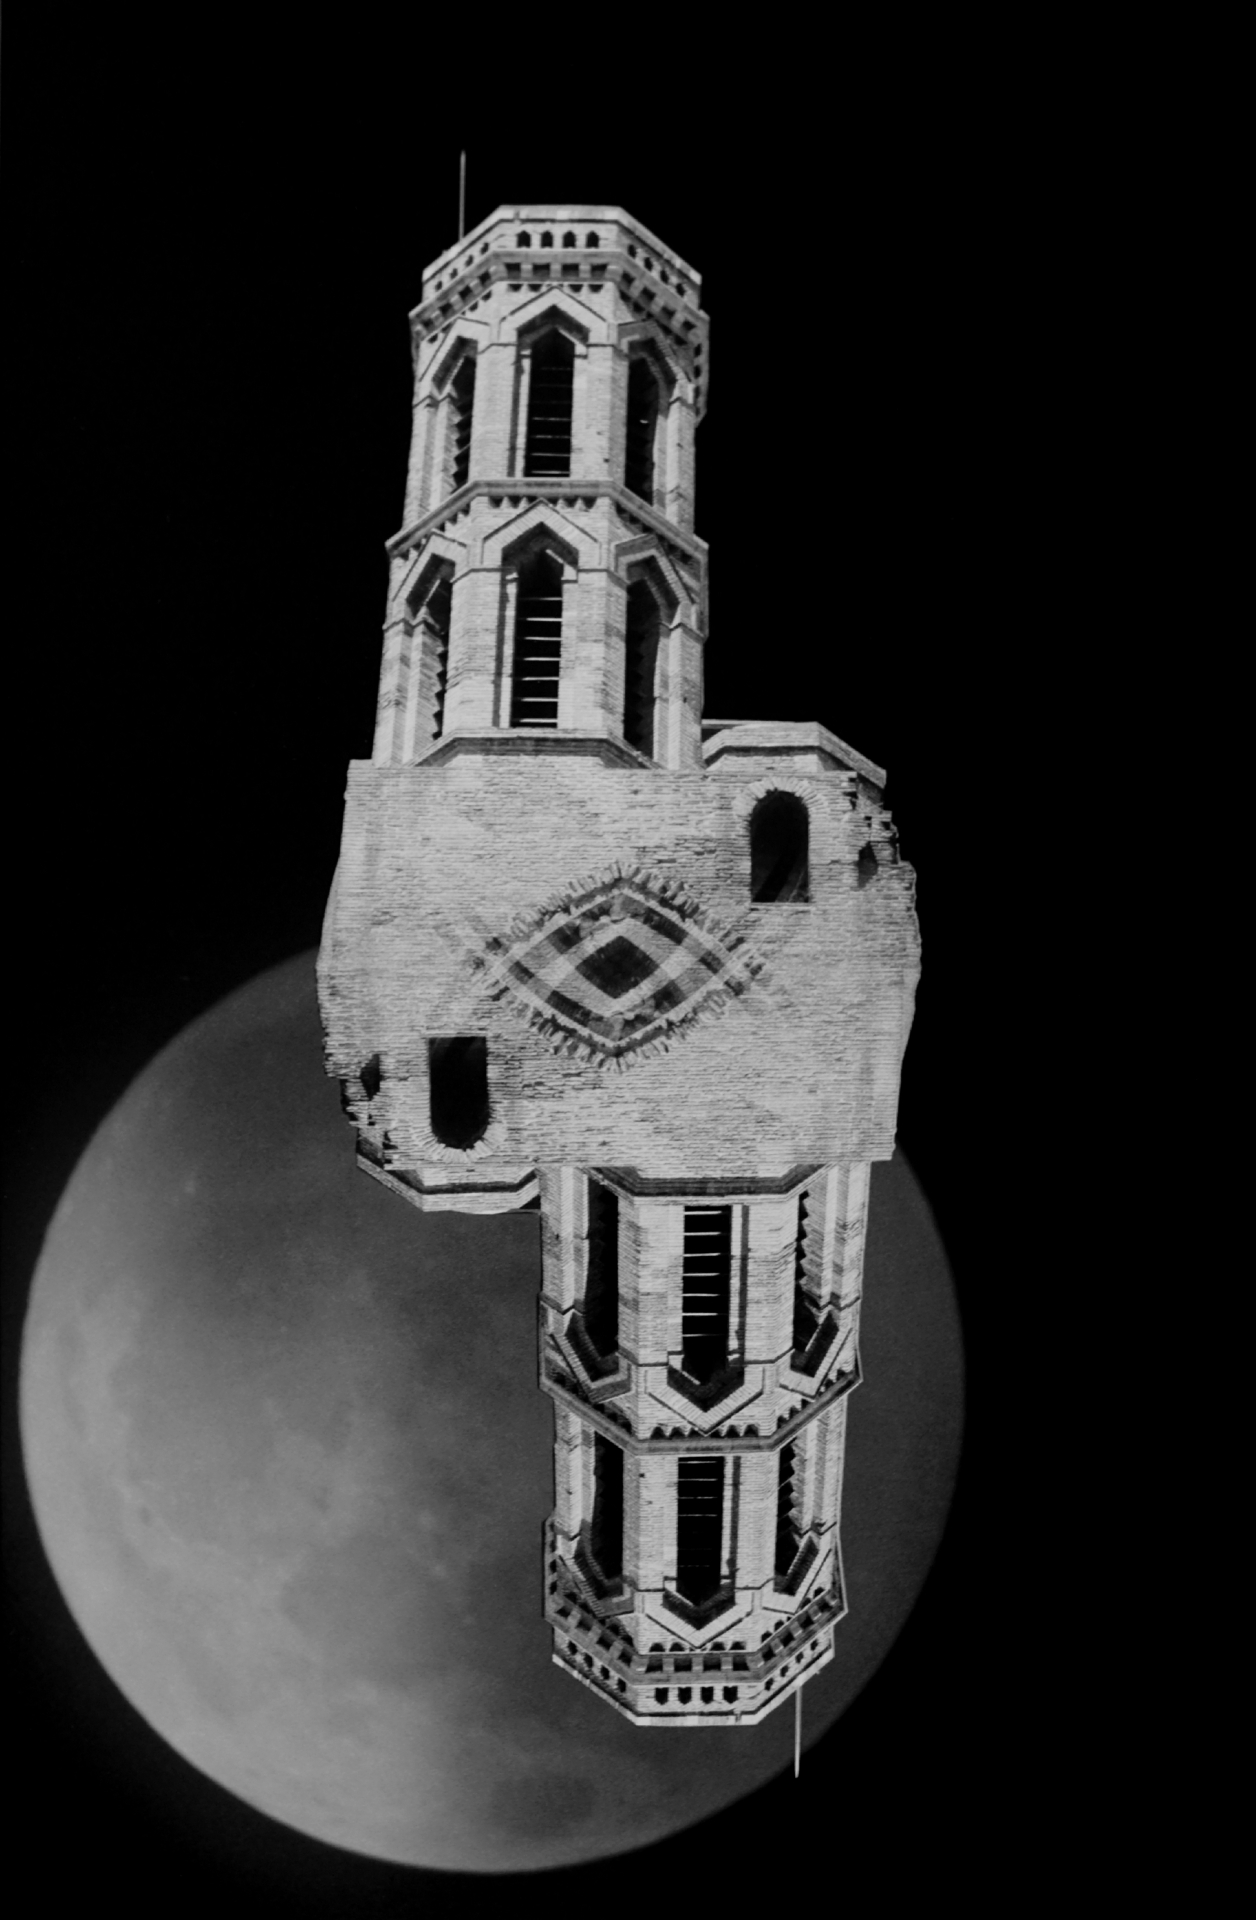 SL Web by David Allen (“Space Triptych: Split level | Fleet | Tesseract Kazoo” Moon negatives by Richard Davies)